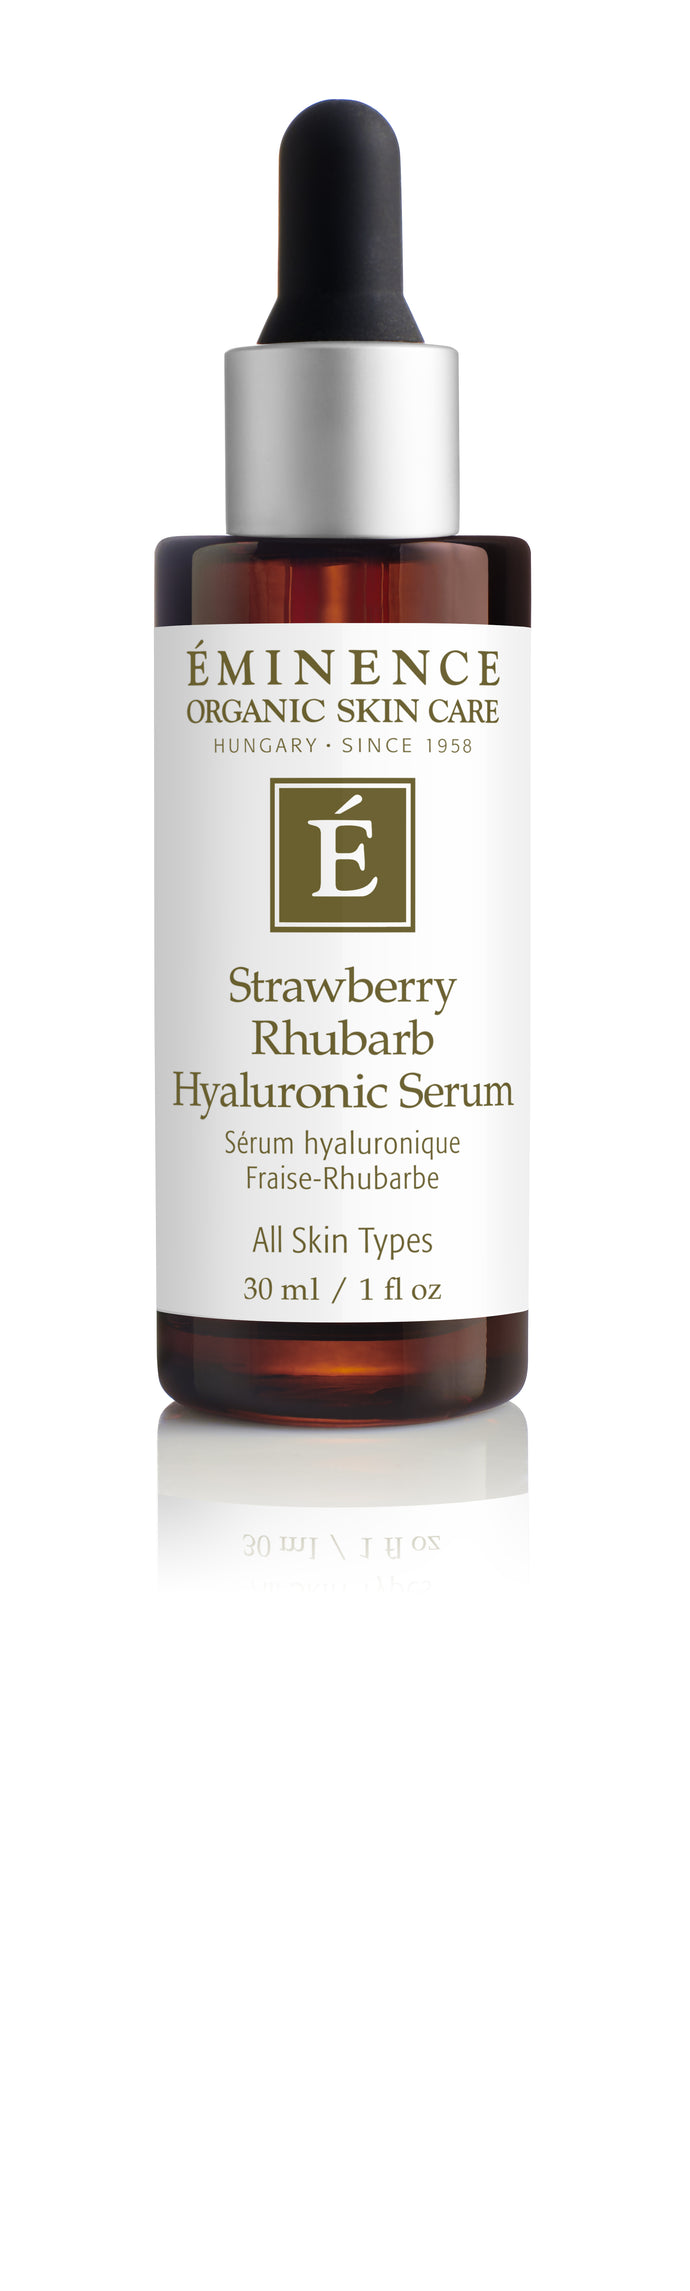 Eminence Organics Strawberry Rhubarb Hyaluronic Serum